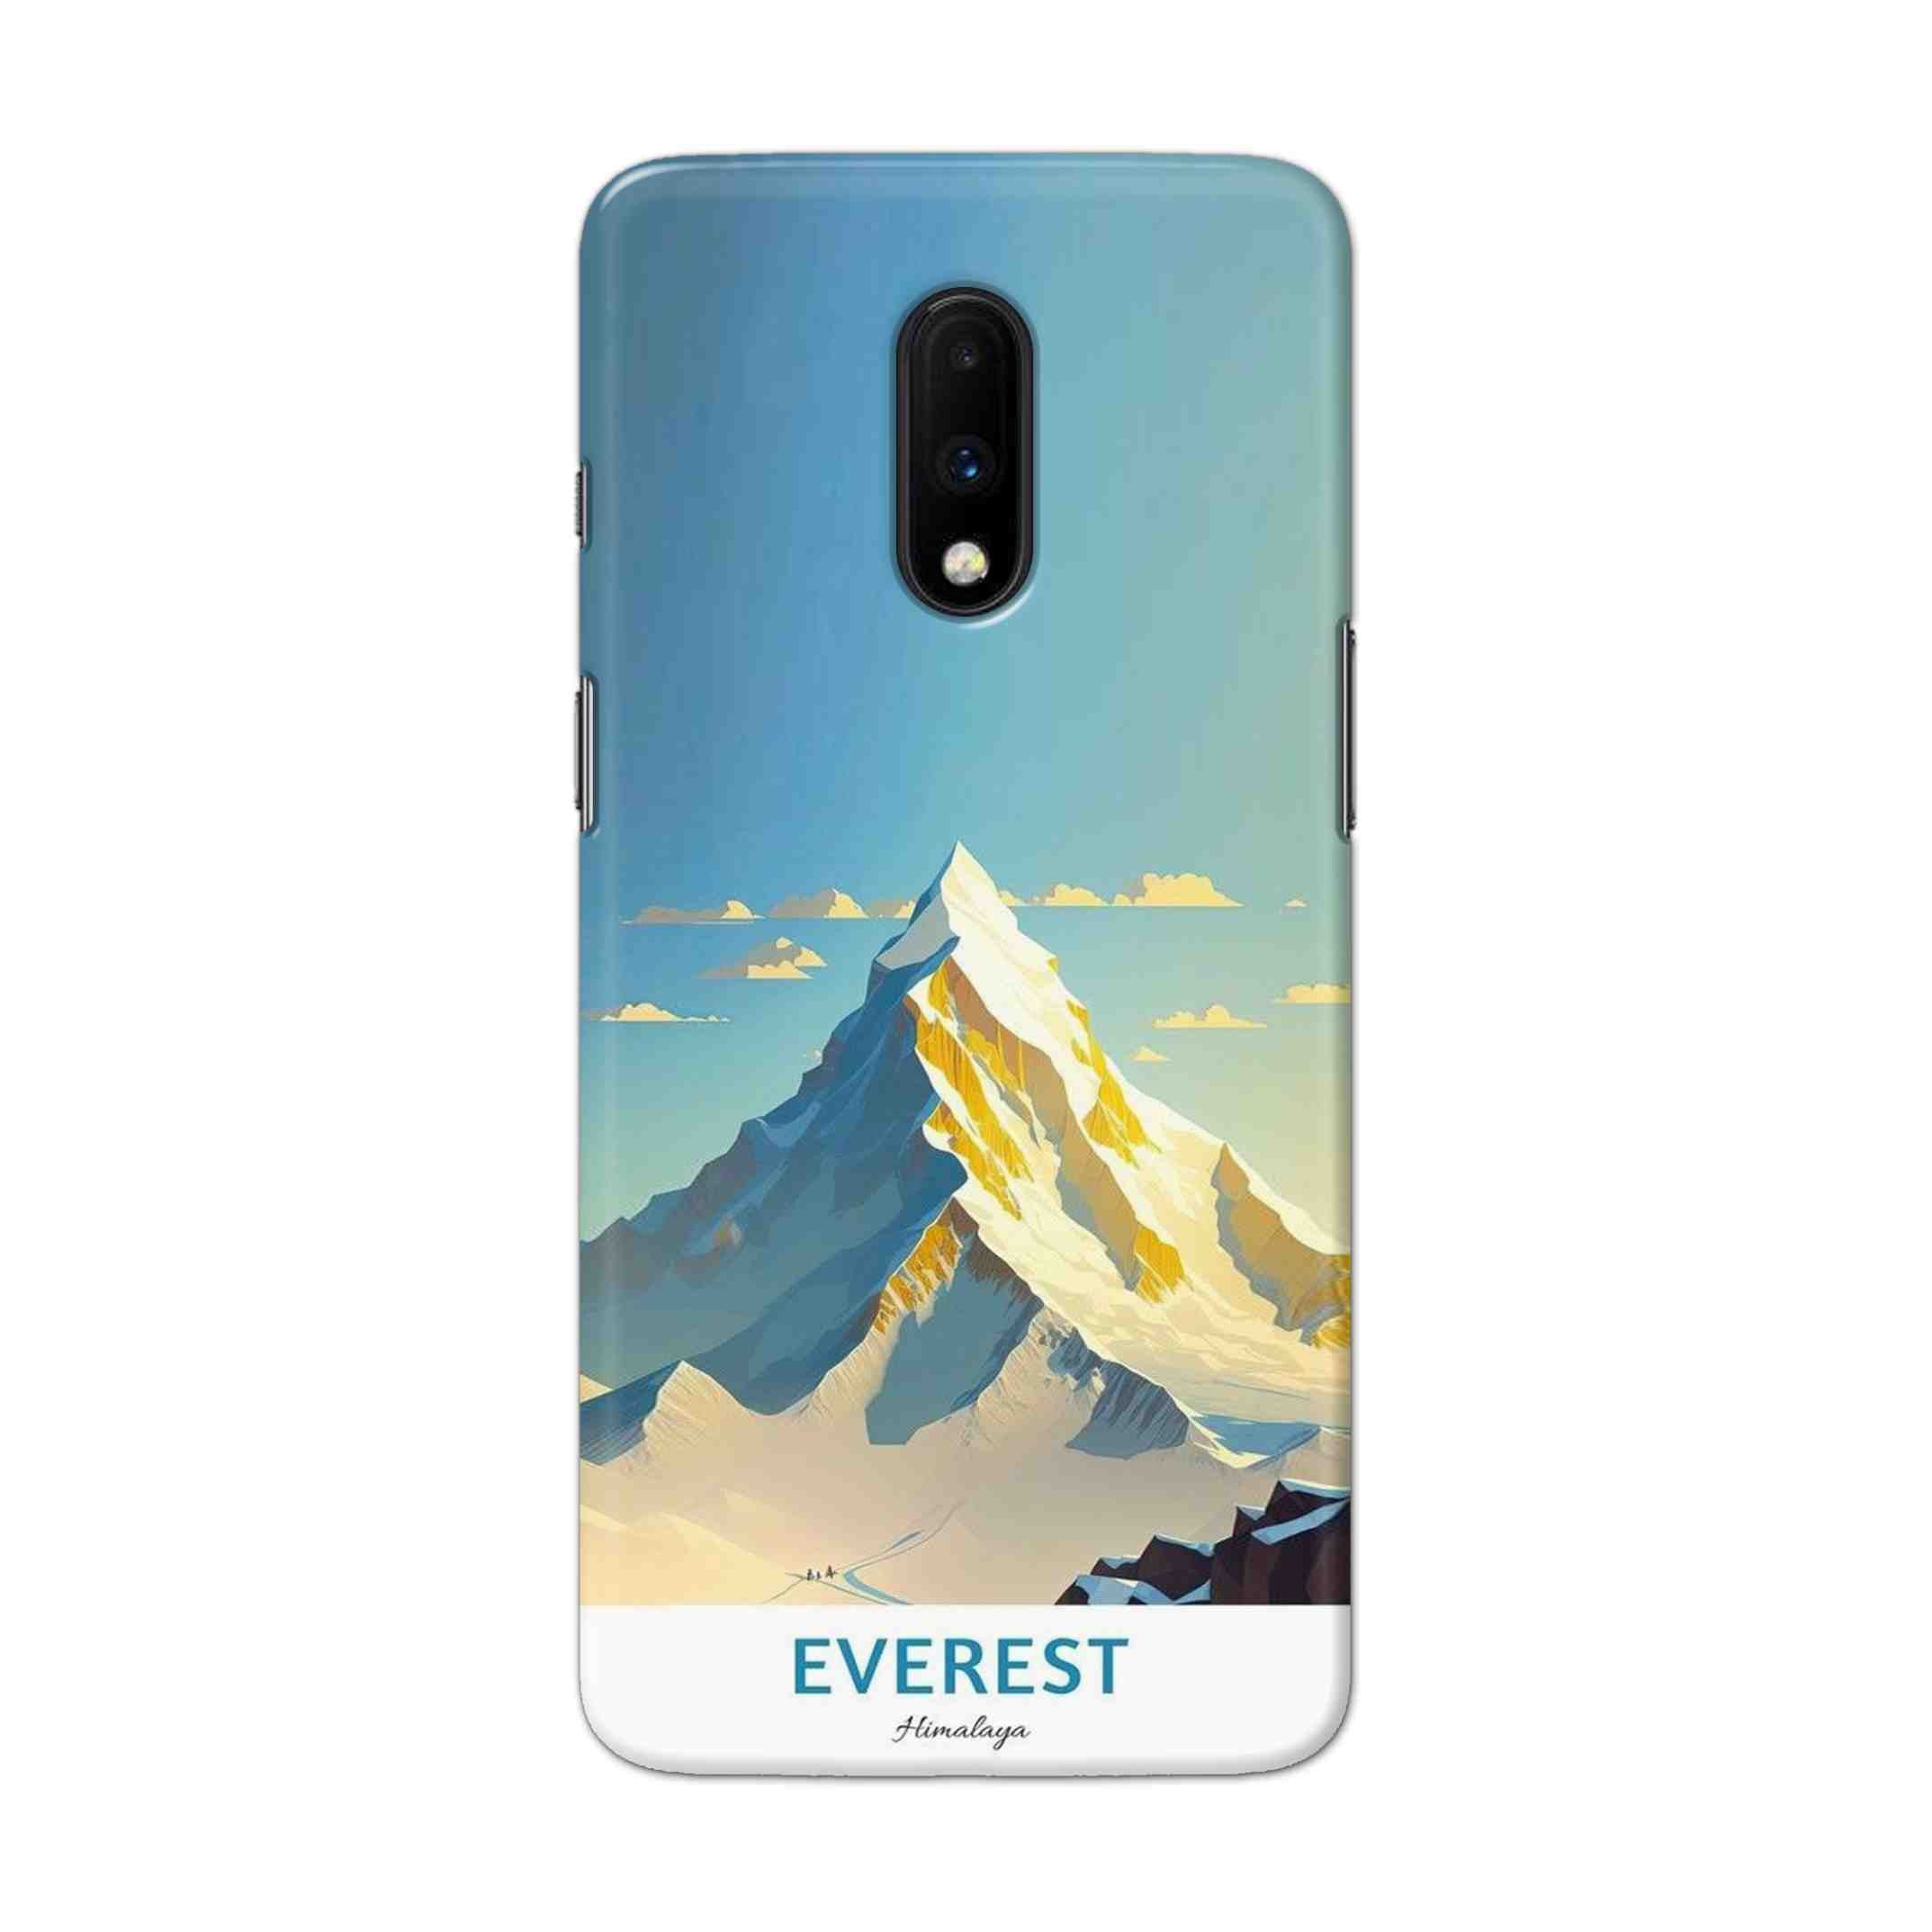 Buy Everest Hard Back Mobile Phone Case Cover For OnePlus 7 Online